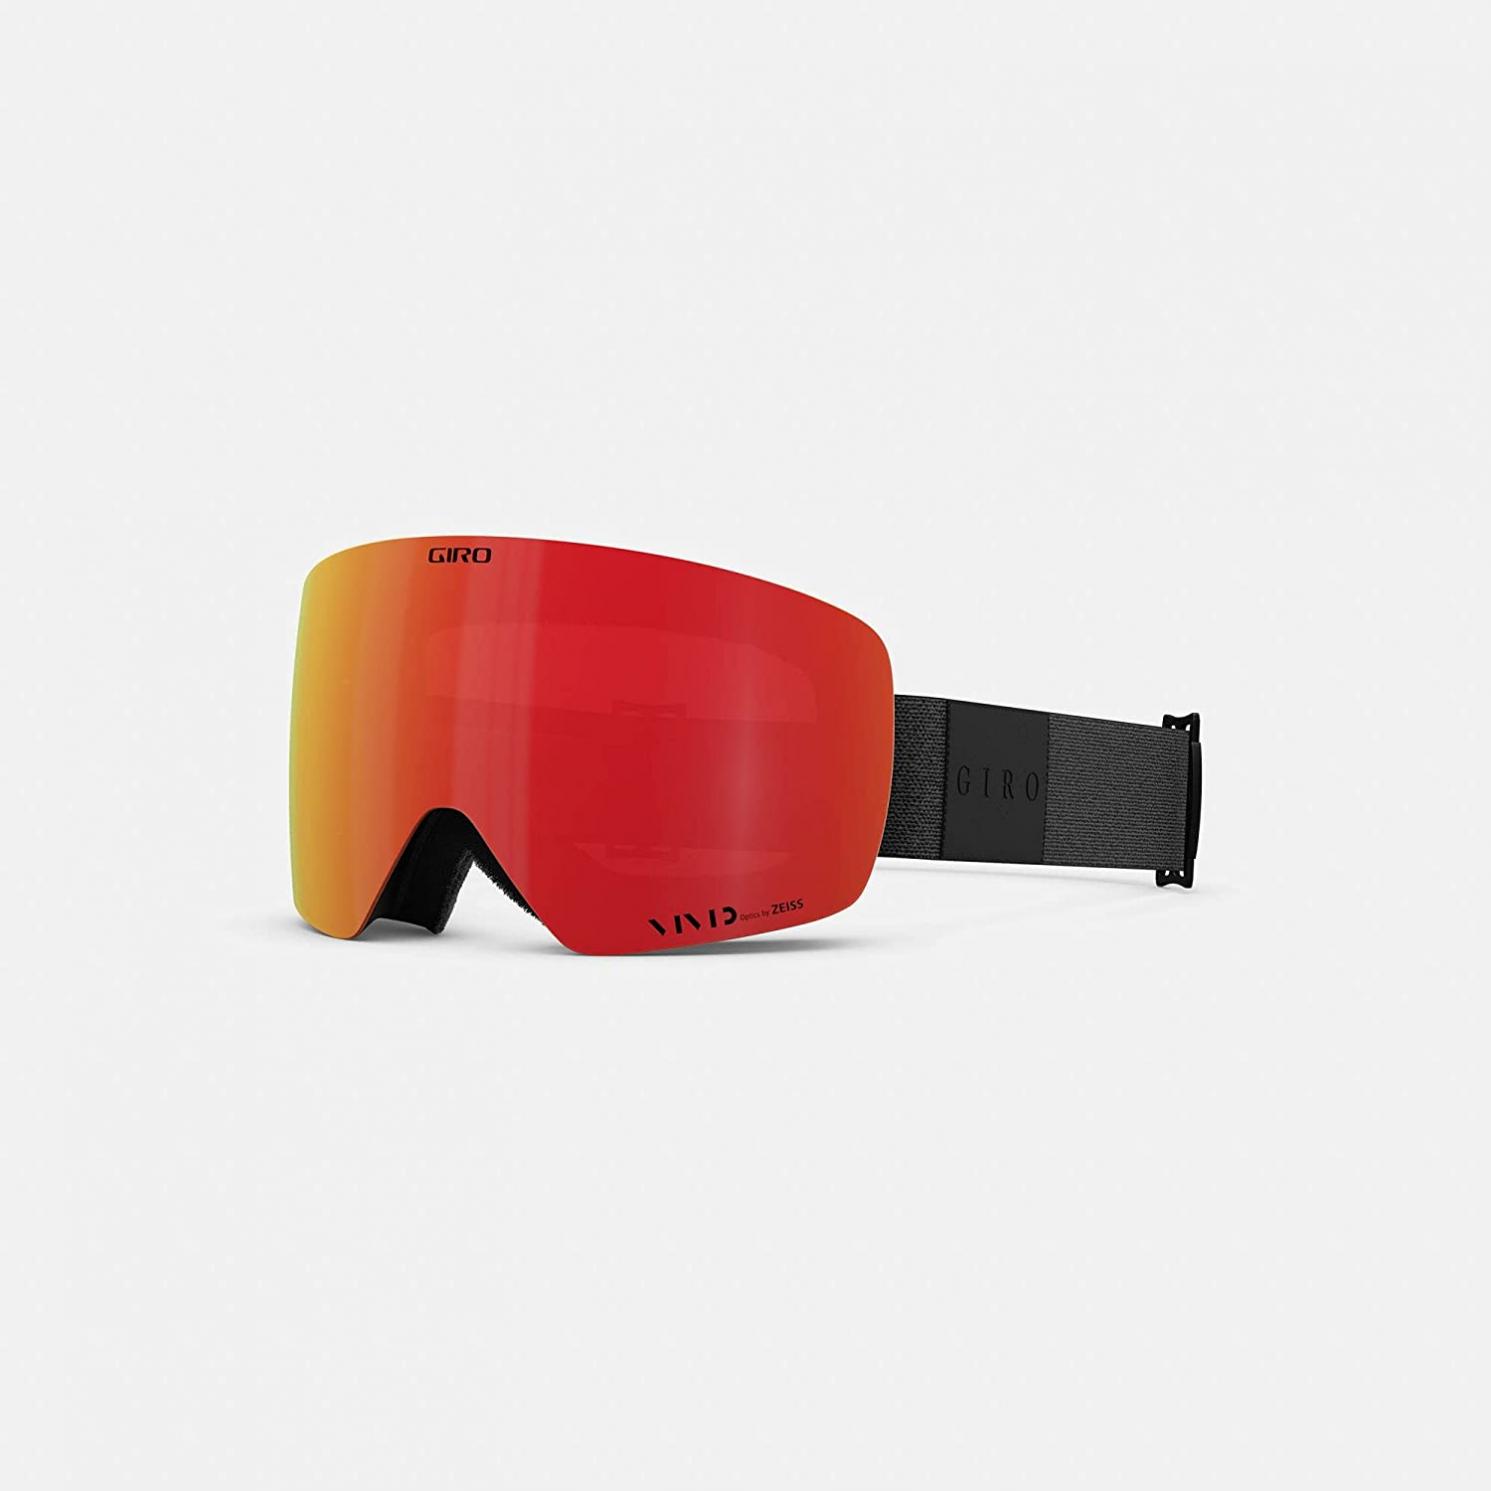 Giro Contour RS Snow Ski Goggles -Men & Women - Magnetic Quick Change with 2 Vivid Lenses - Anti-Fog Vent Tech - OTG